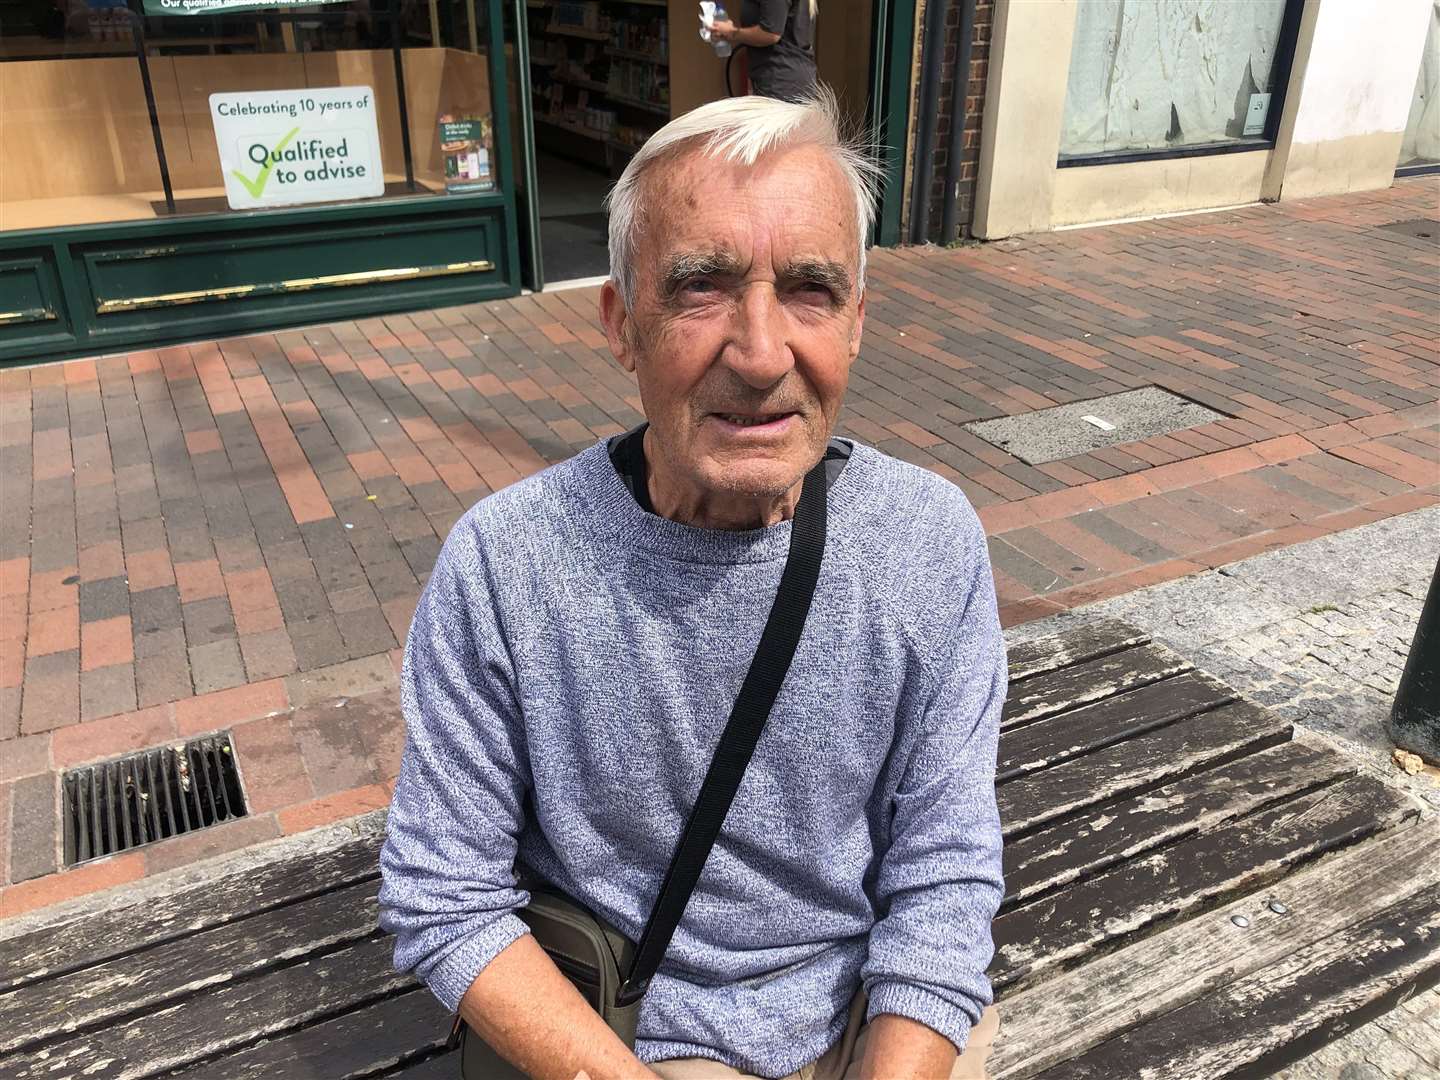 Victor Easdown, 82, said Chatham High Street has changed